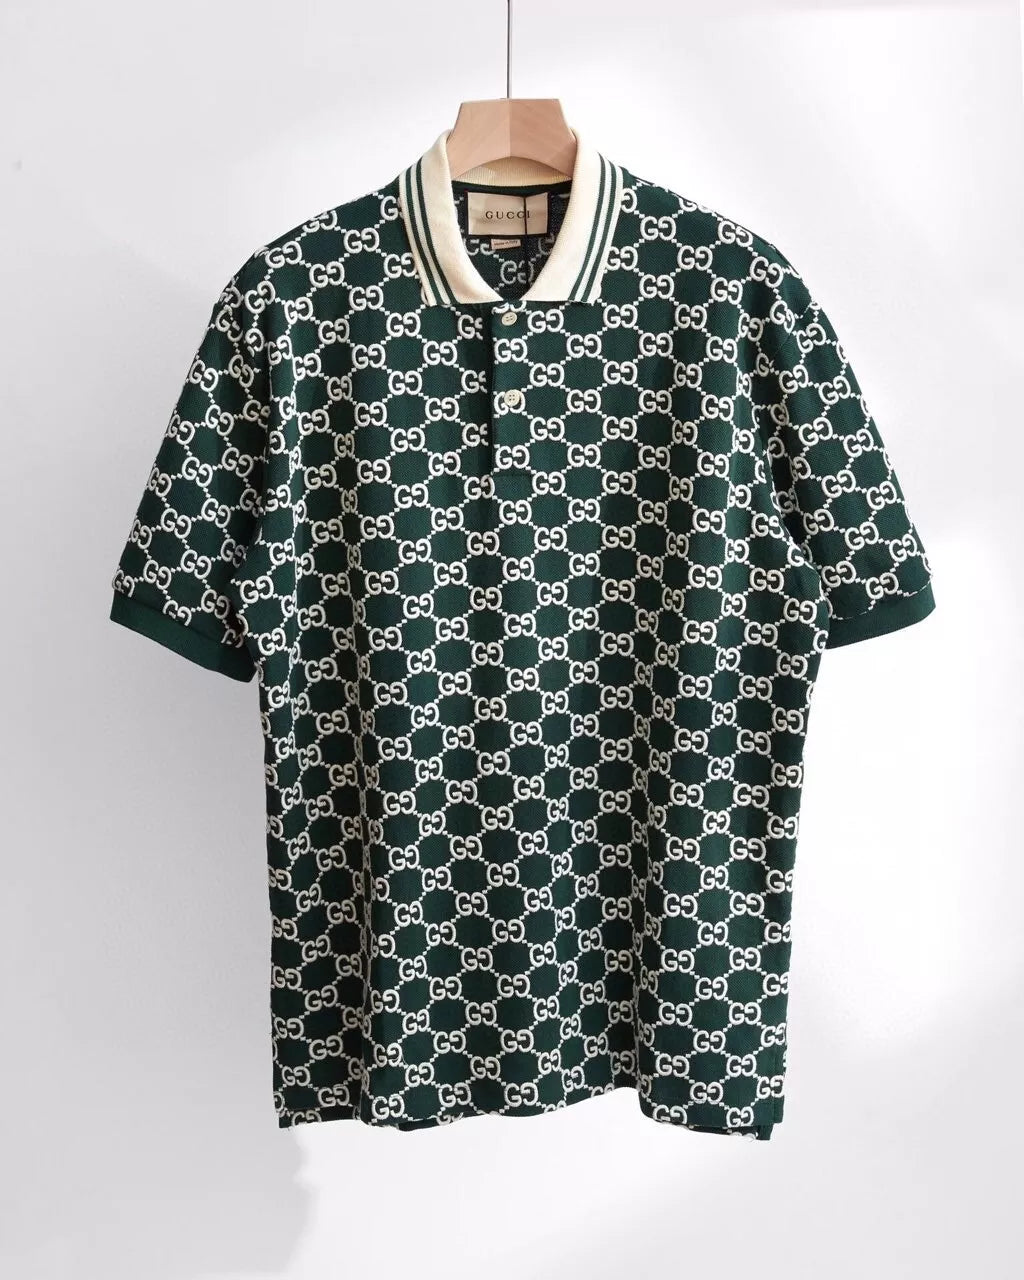 Premium GG Embroidery  Polo T-Shirt